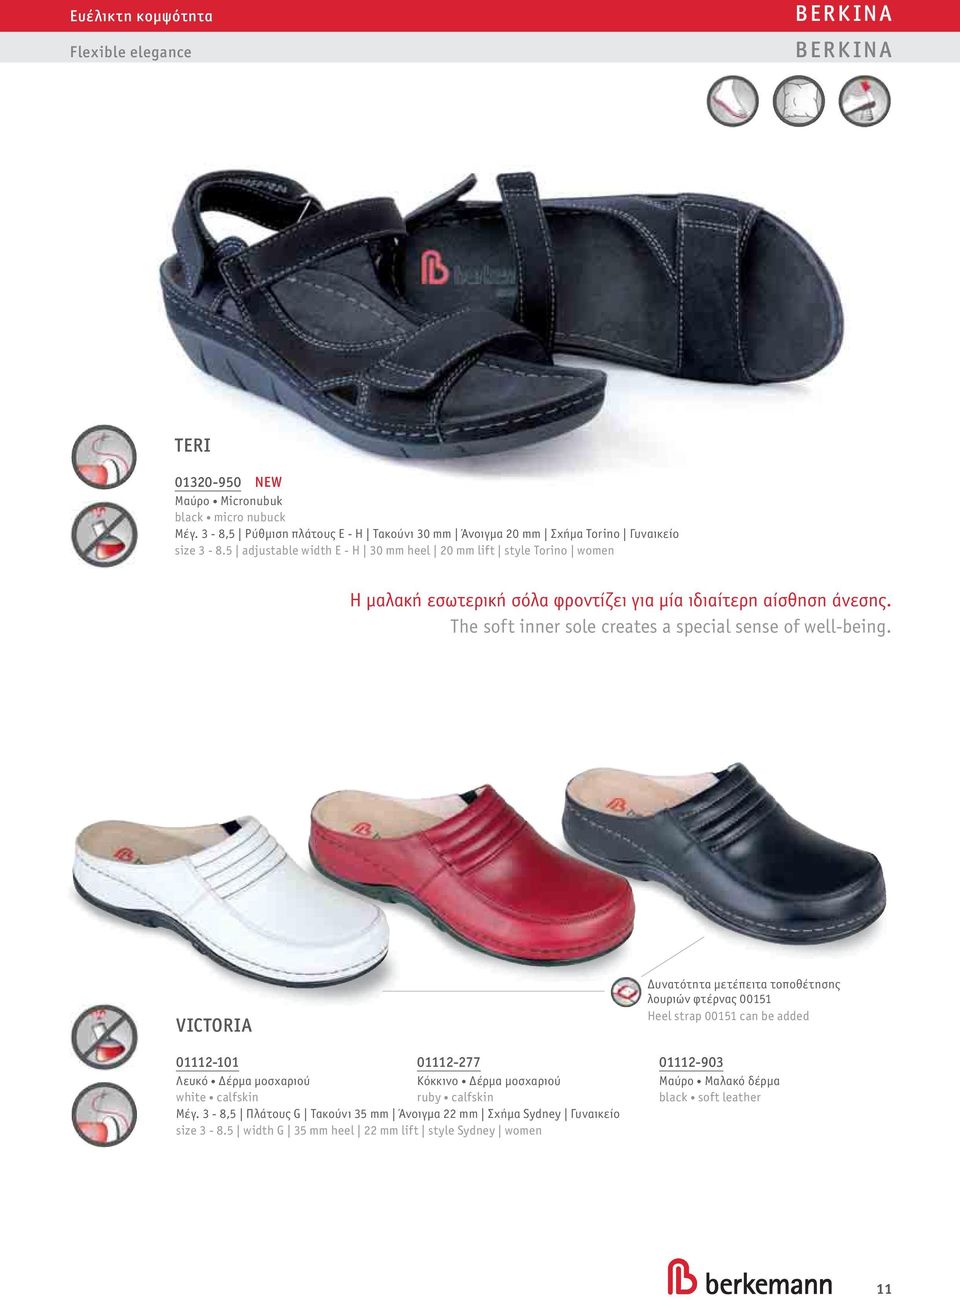 5 adjustable width E - H 30 mm heel 20 mm lift style Torino women Η μαλακή εσωτερική σόλα φροντίζει για μία ιδιαίτερη αίσθηση άνεσης. The soft inner sole creates a special sense of well-being.